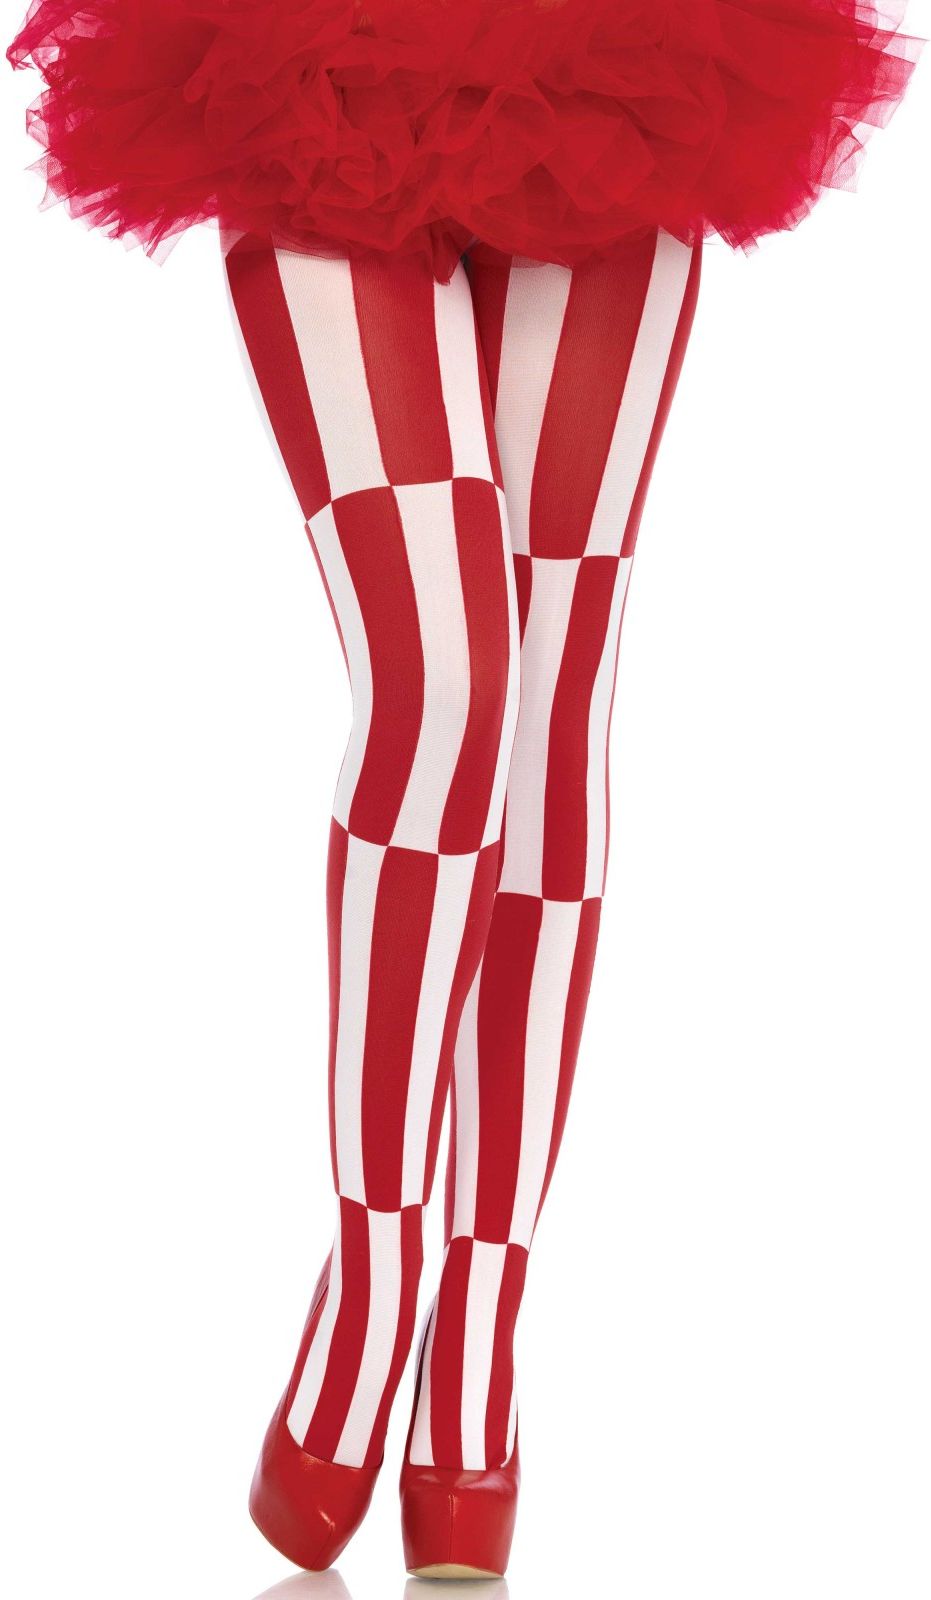 Panty optische illusie rood-wit